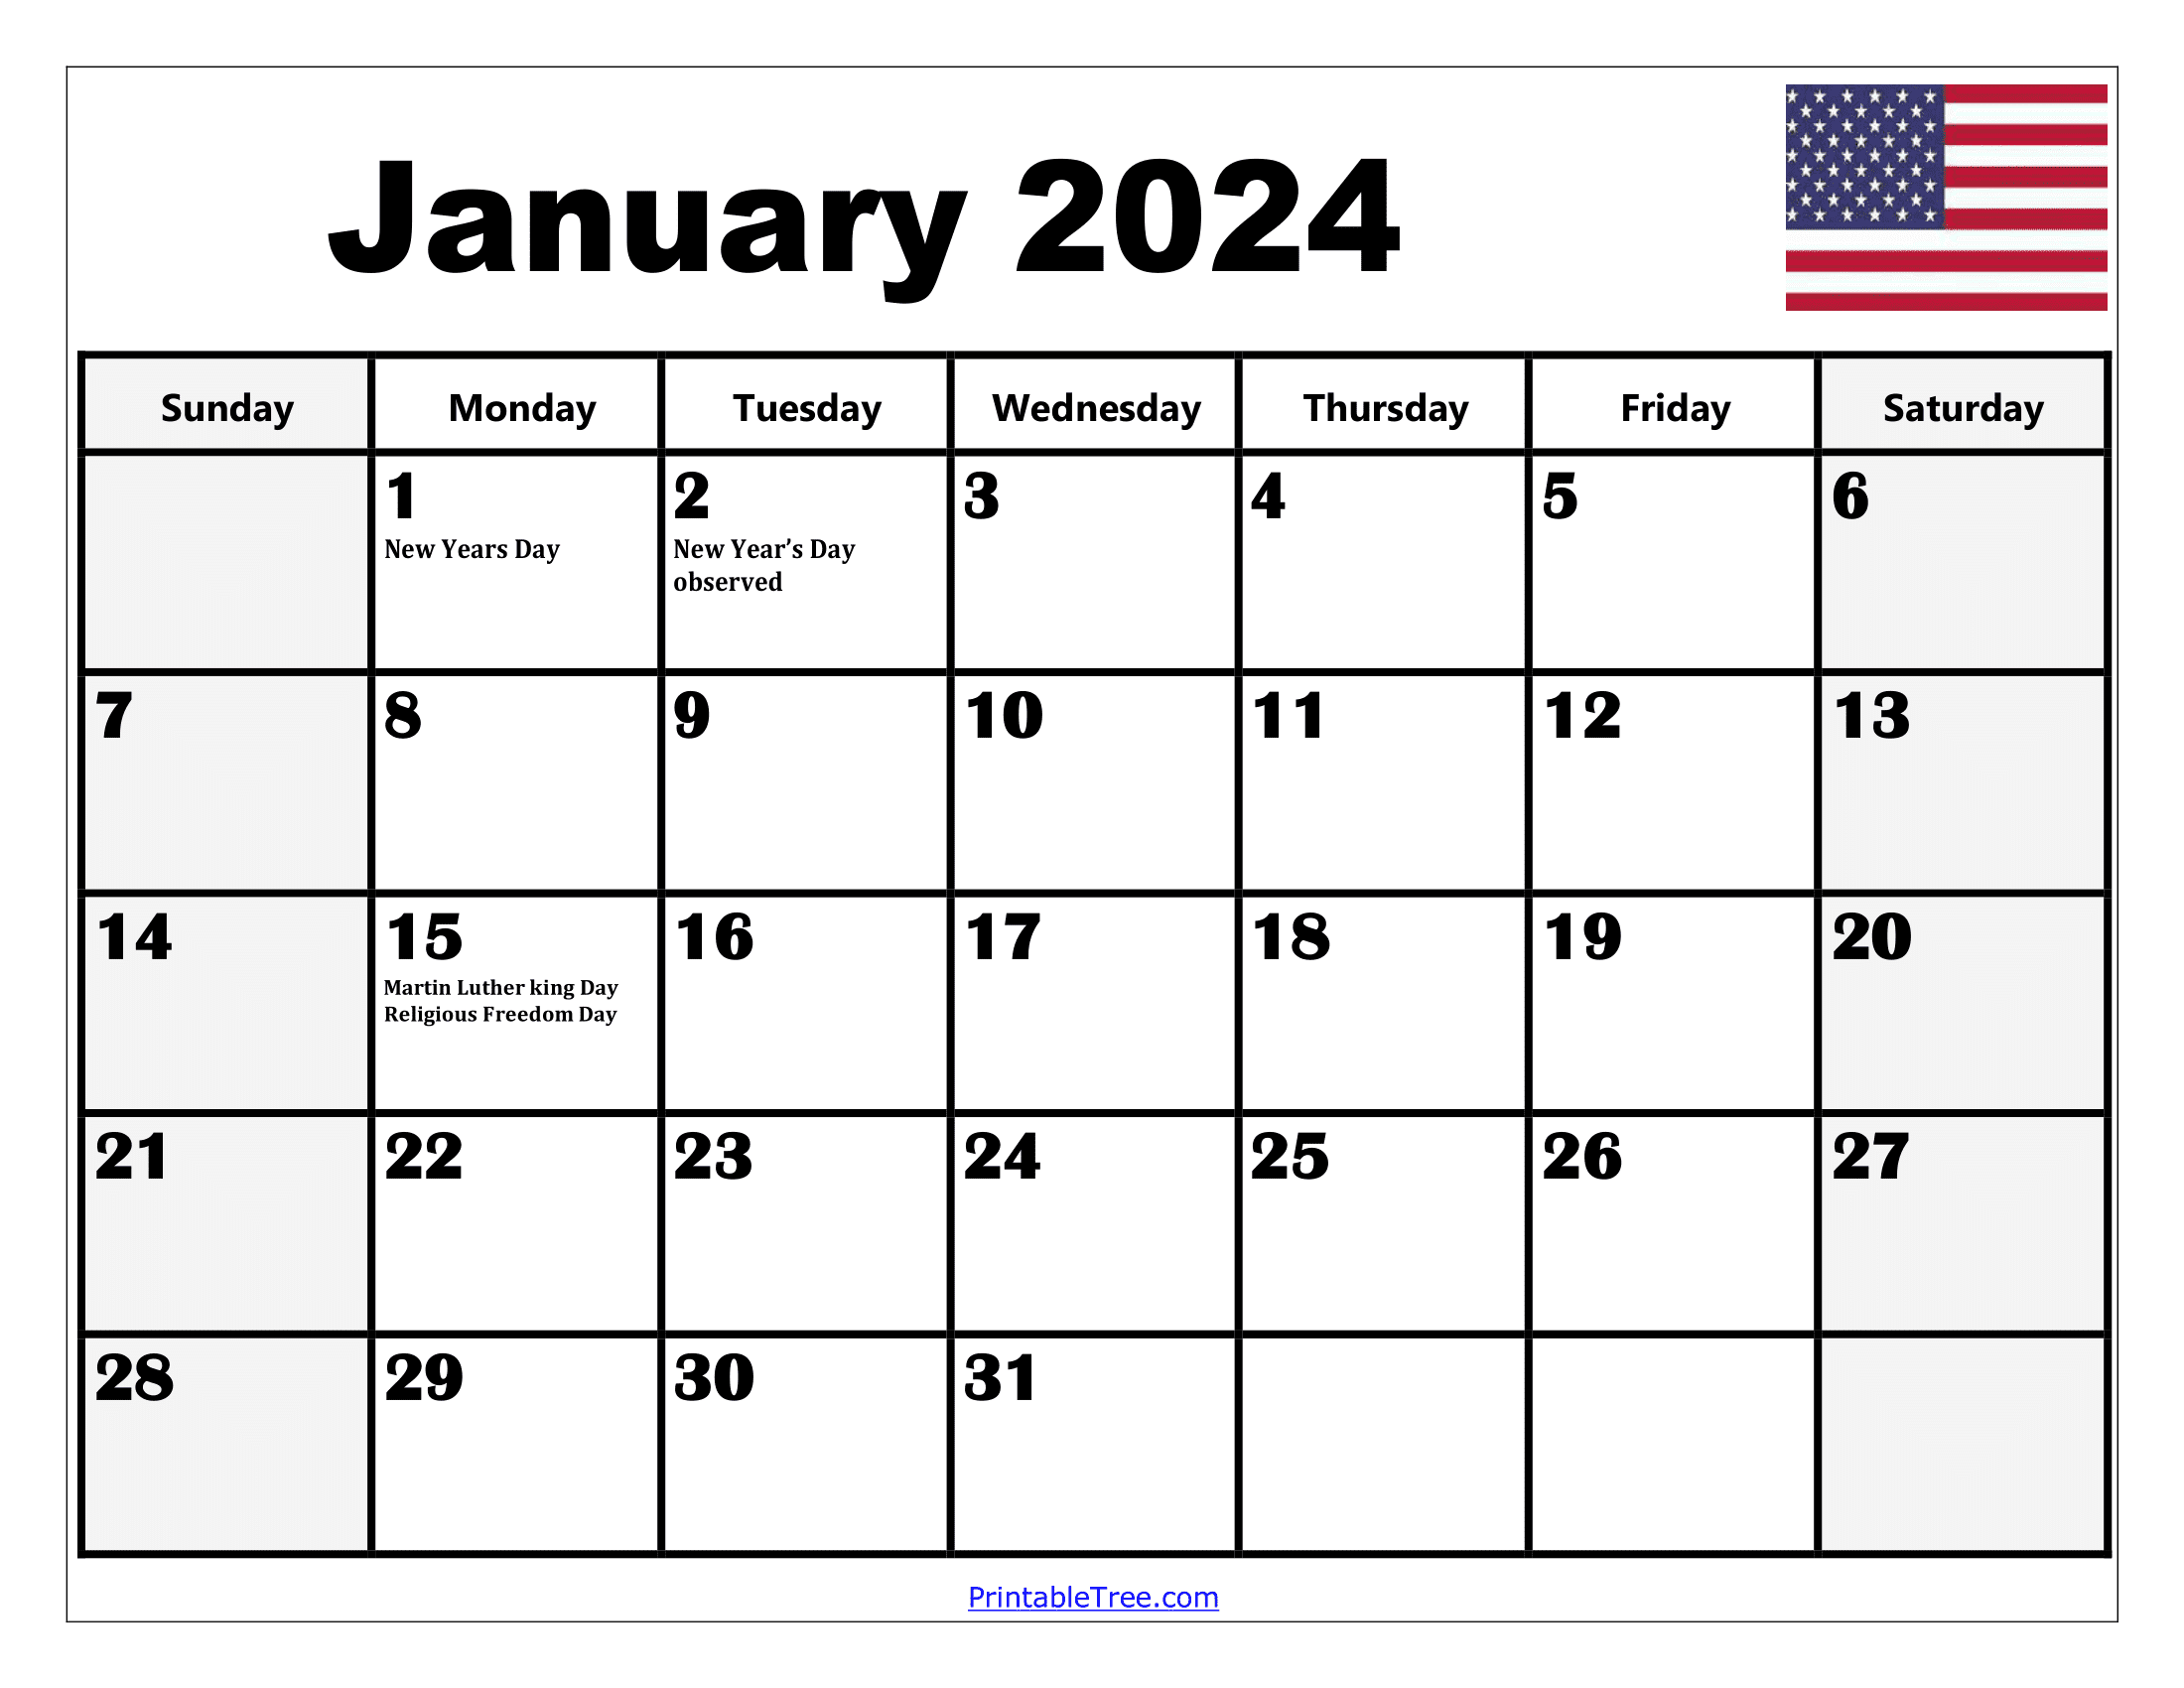 January 2024 Calendar Printable Pdf Template With Holidays for Printable Monthly Calendar 2024 With Holidays